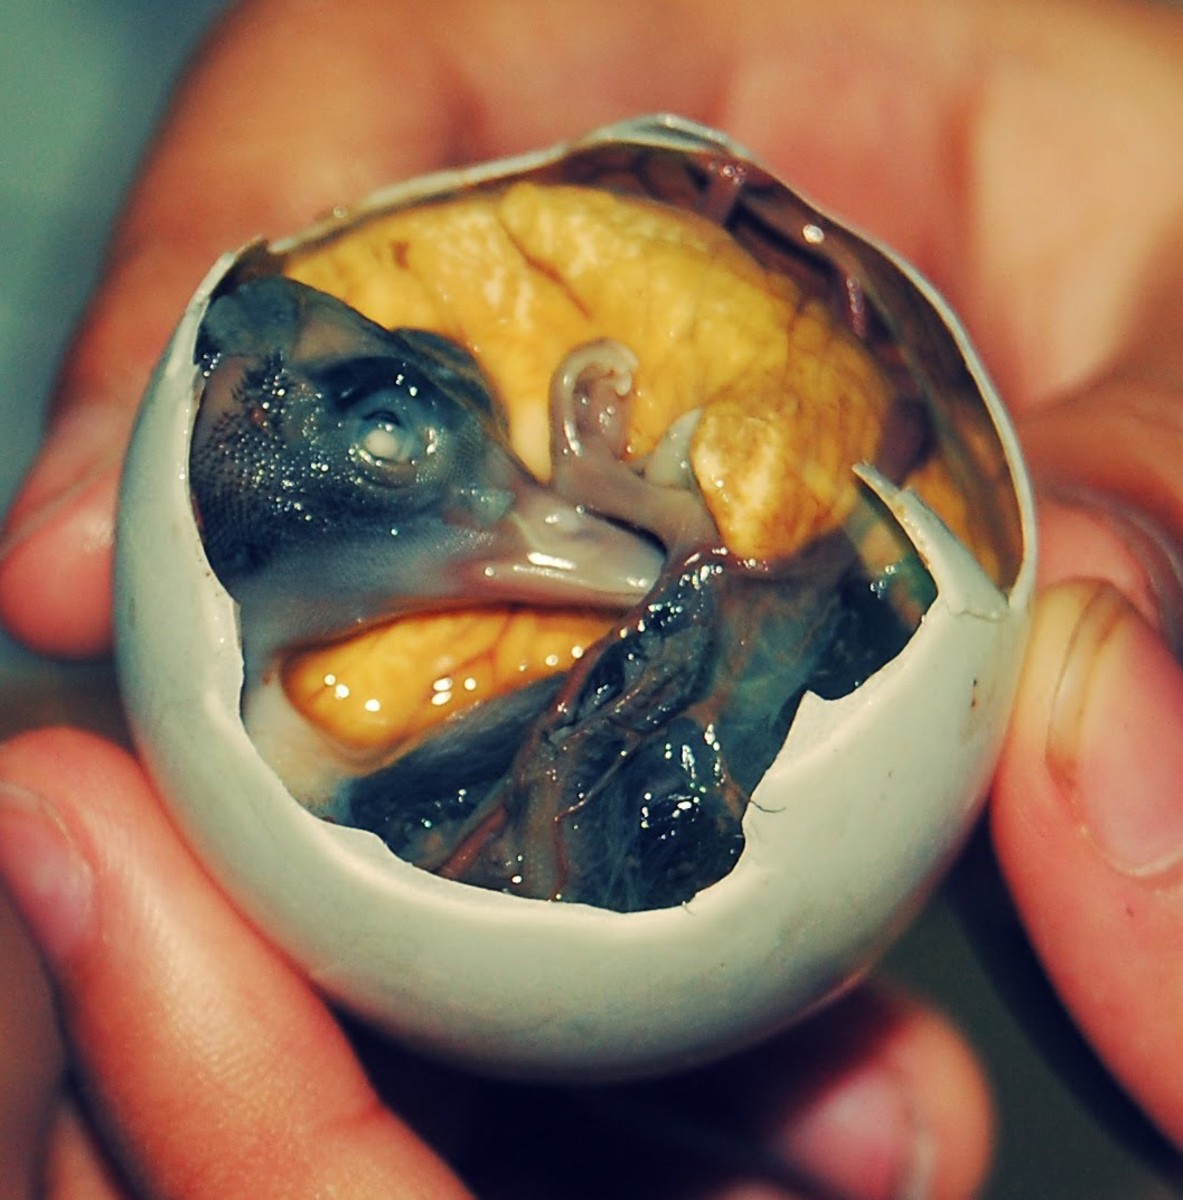 Balut boiled duck embryo